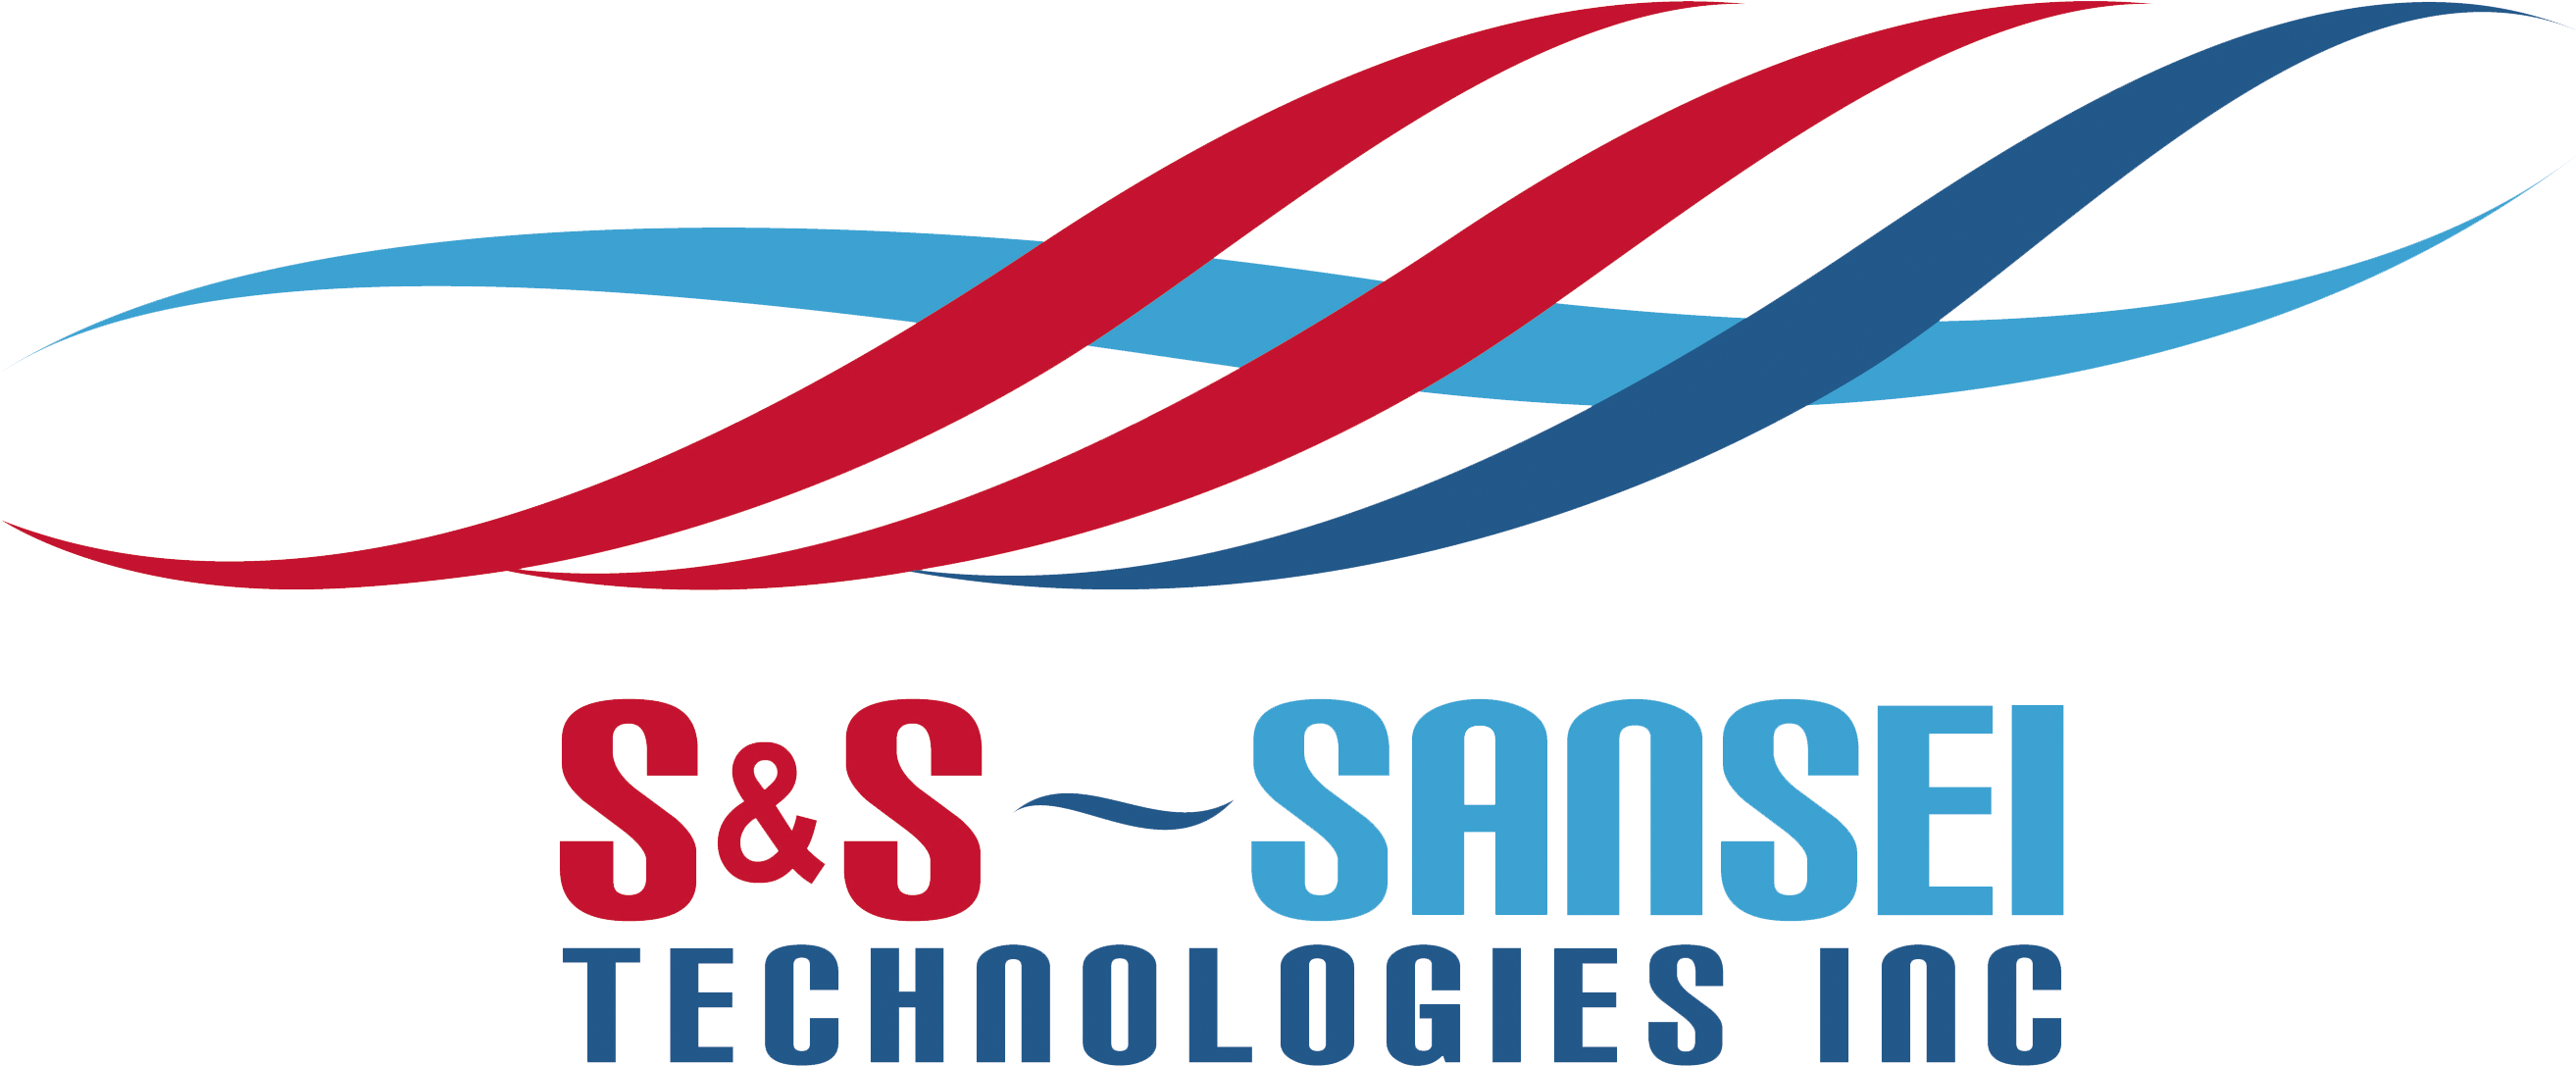 Vlodrop, Netherlands Dutch Roller Coaster Manufacturer - S&s - Sansei Technologies (2793x1231), Png Download